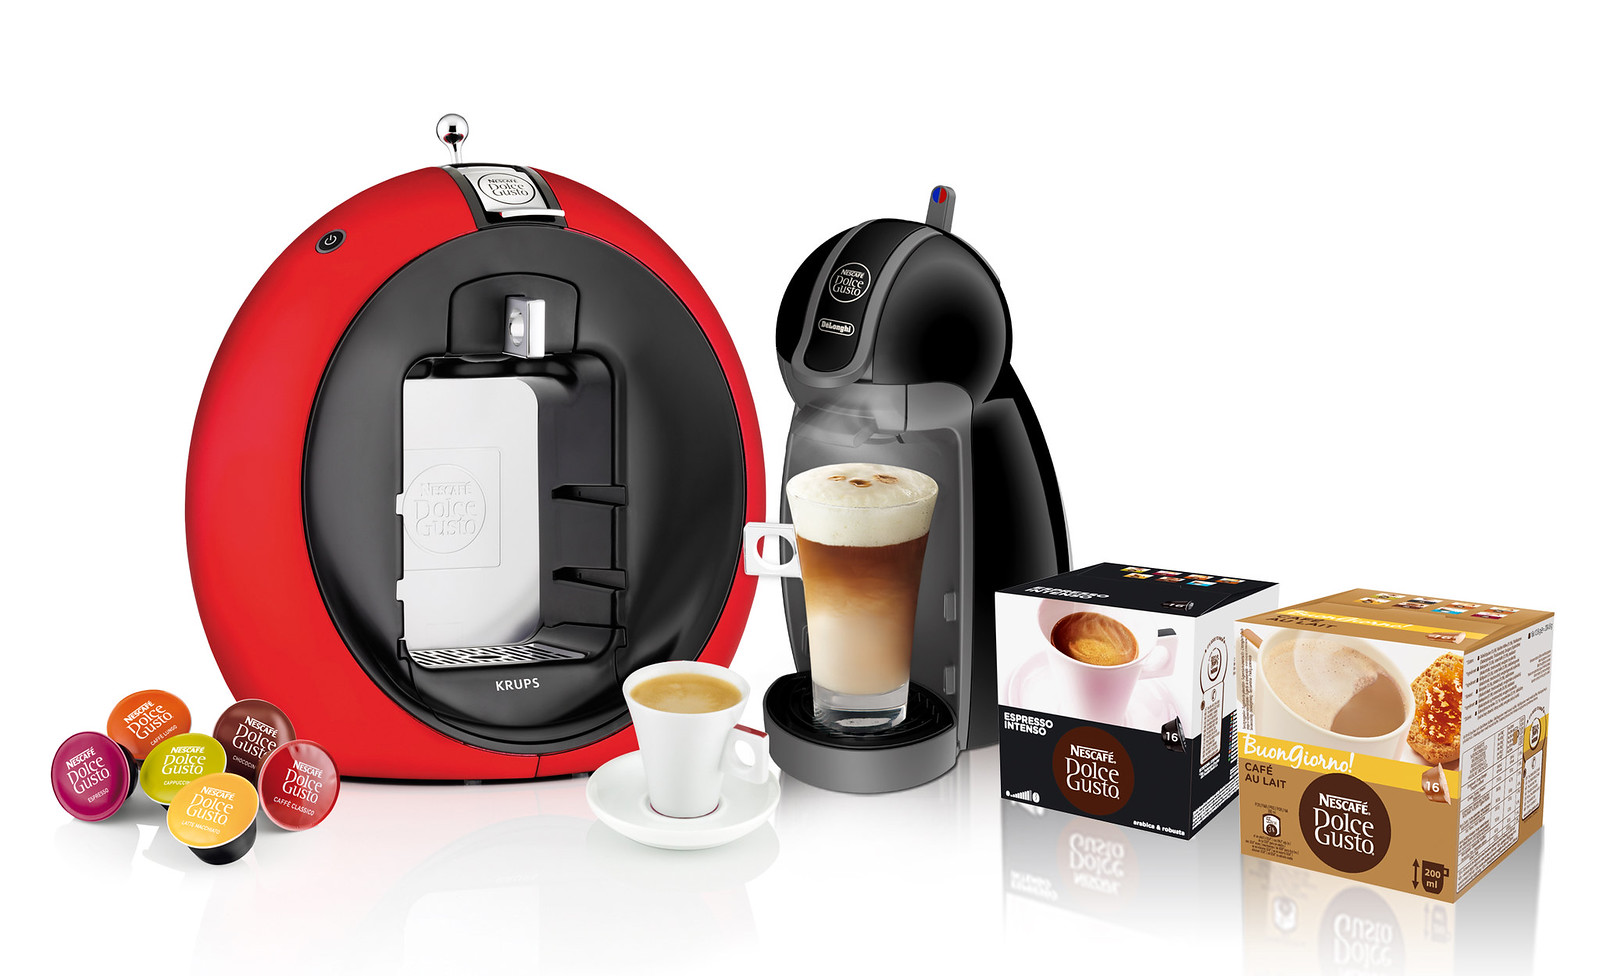 Nescafé Dolce Gusto machine, coffee and capsules, Nestlé